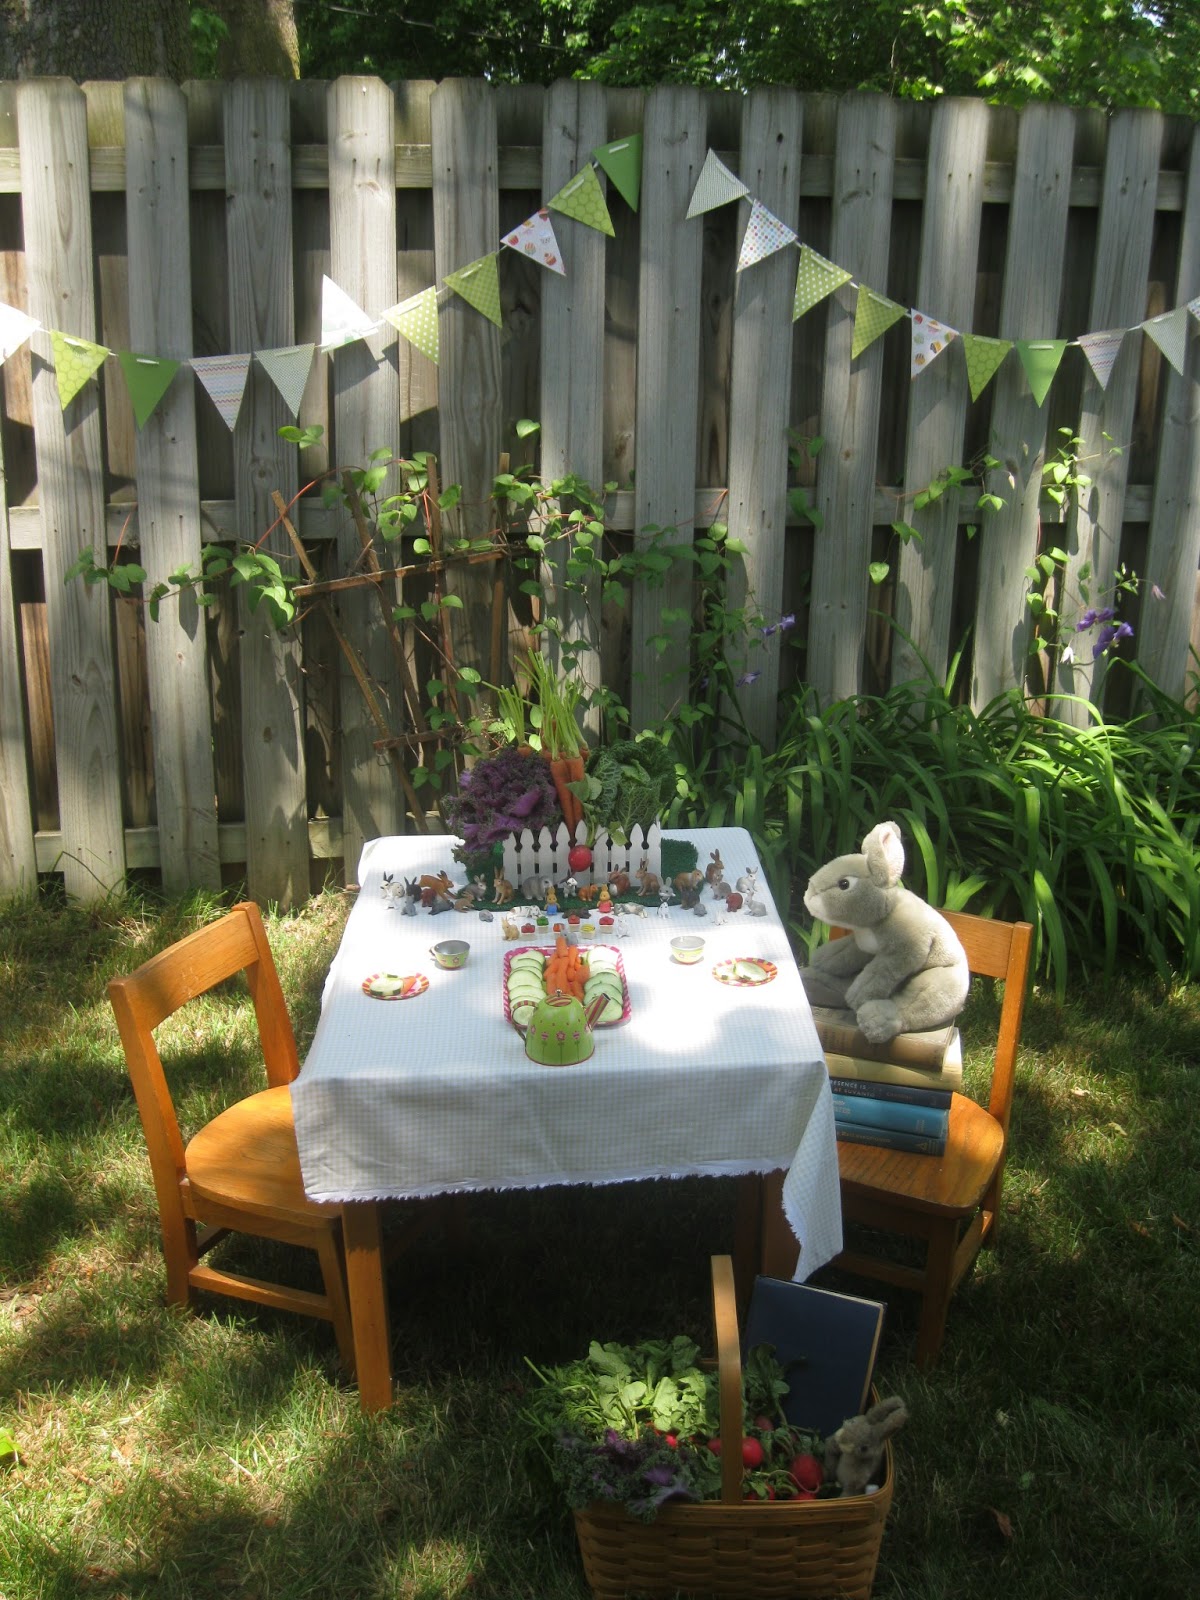 Whimsical Ways Backyard Rabbit Tea Party